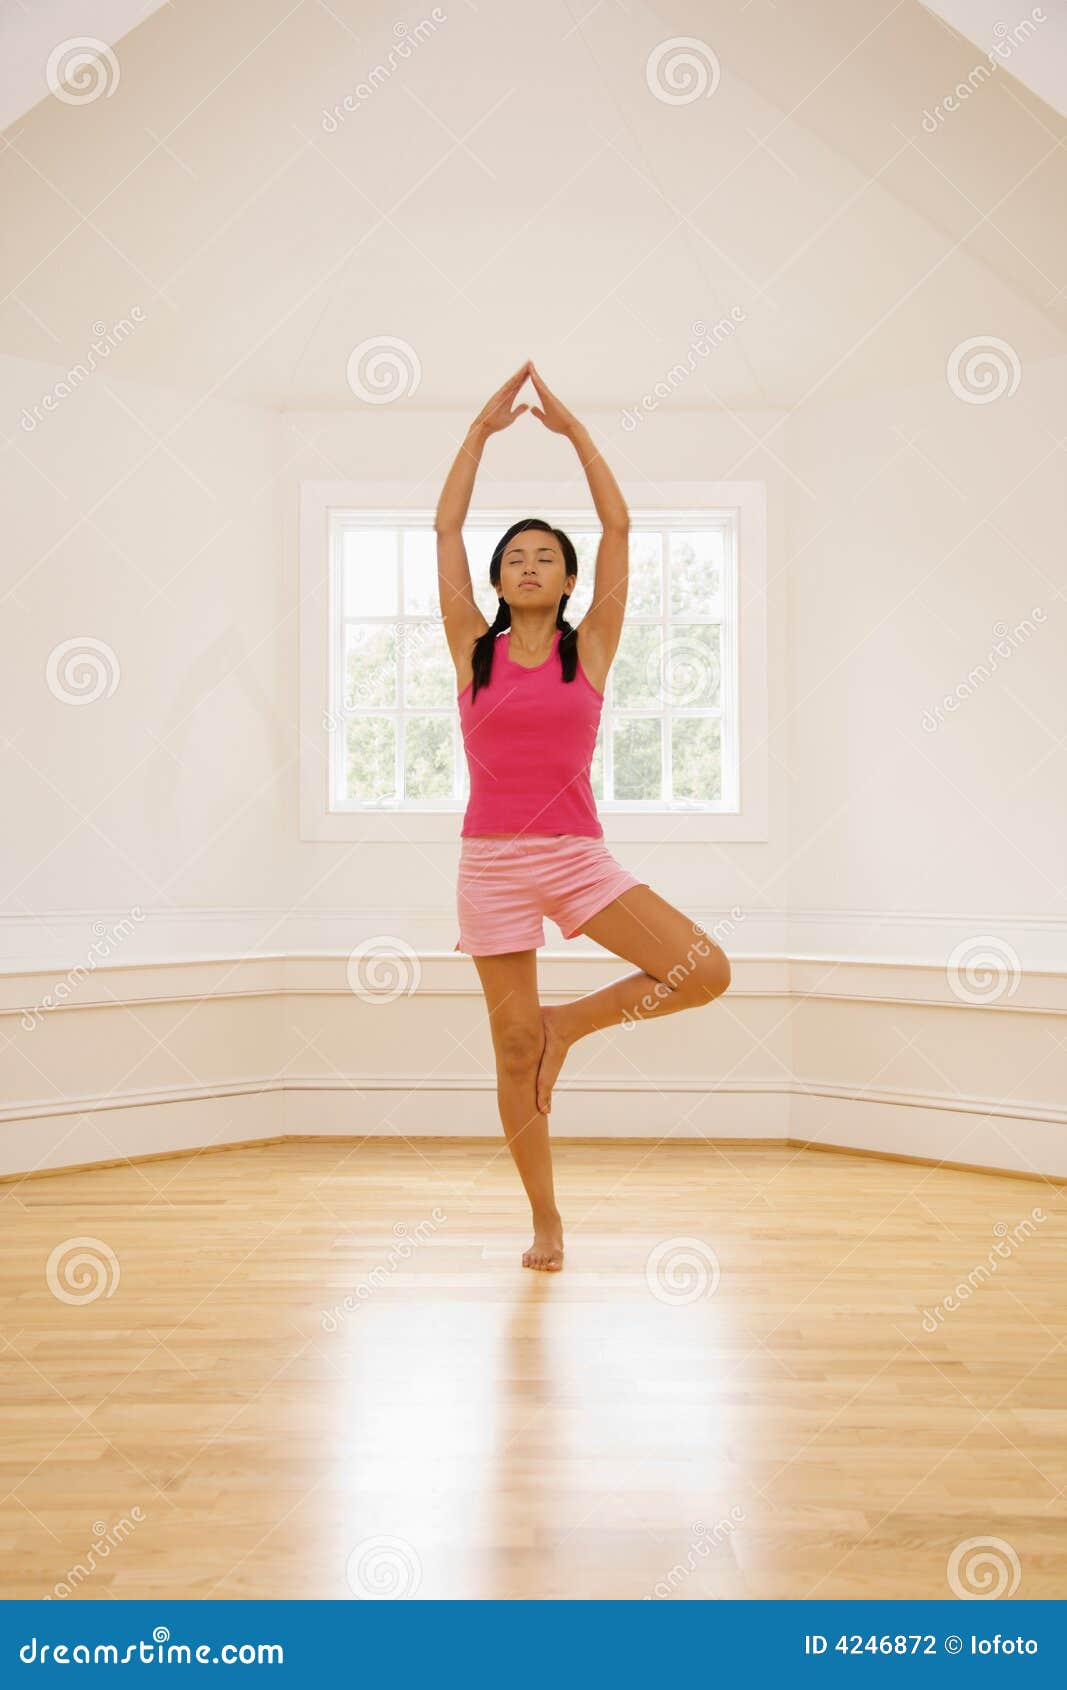 yoga tree pose woman